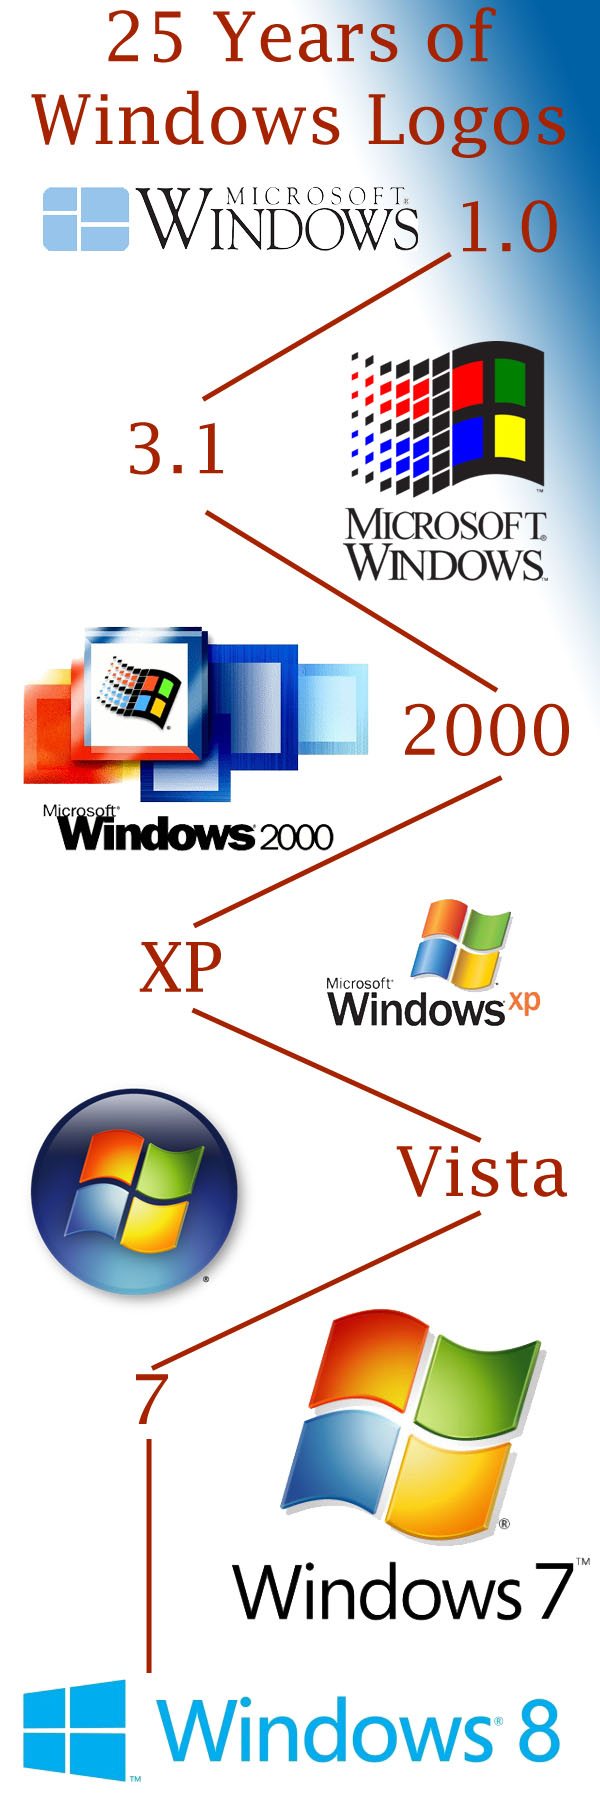 25 Years of Windows Logos